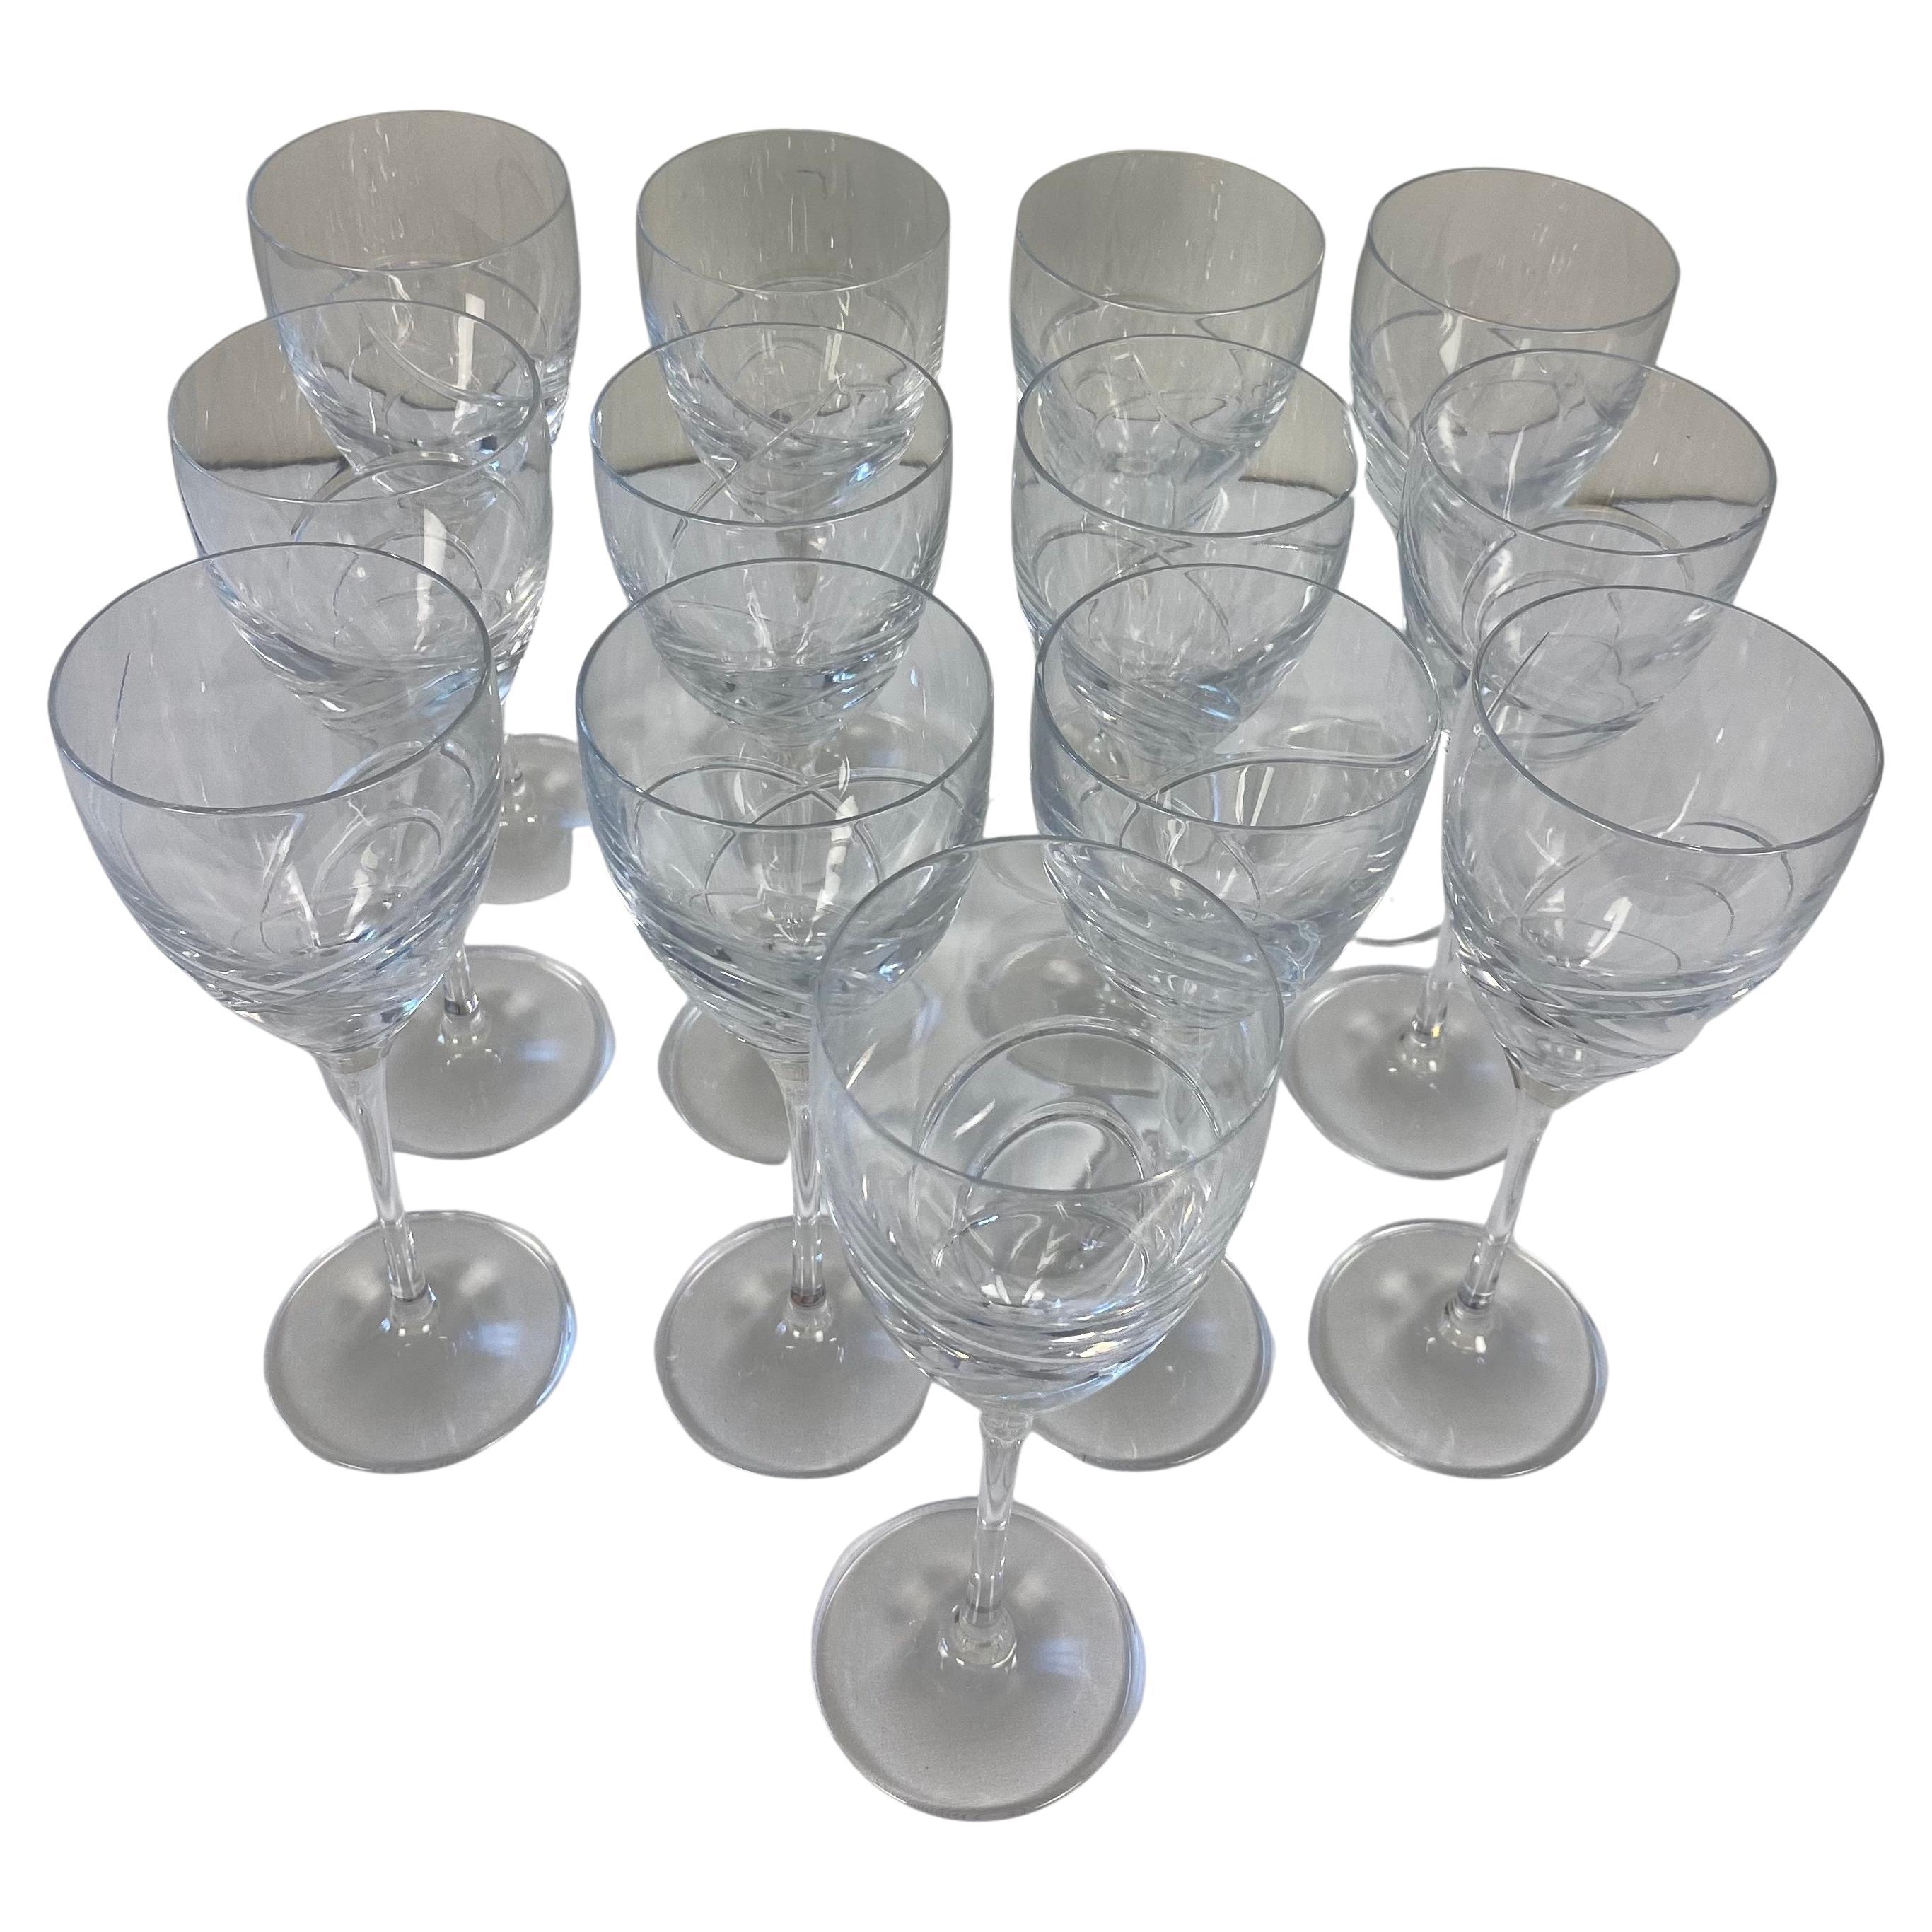 https://a.1stdibscdn.com/set-of-12-cut-crystal-wine-glasses-by-lenox-for-sale/f_40821/f_310386821666898353432/f_31038682_1666898354665_bg_processed.jpg